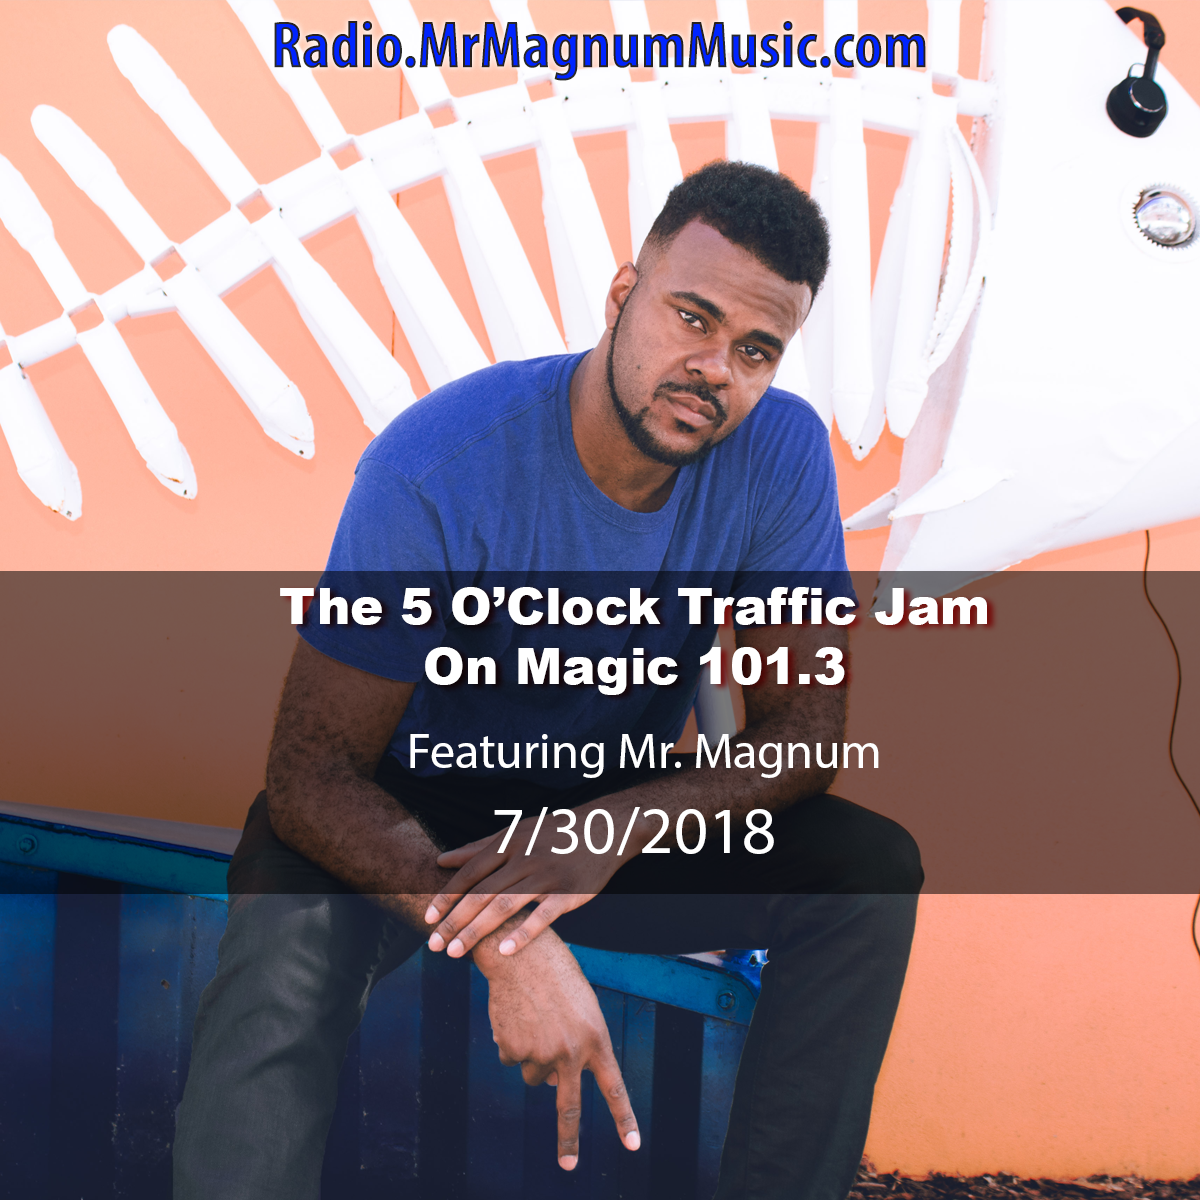 The 5 O'Clock Traffic Jam 20180730 featuring Gainesville's #1 DJ, Mr. Magnum on Magic 101.3